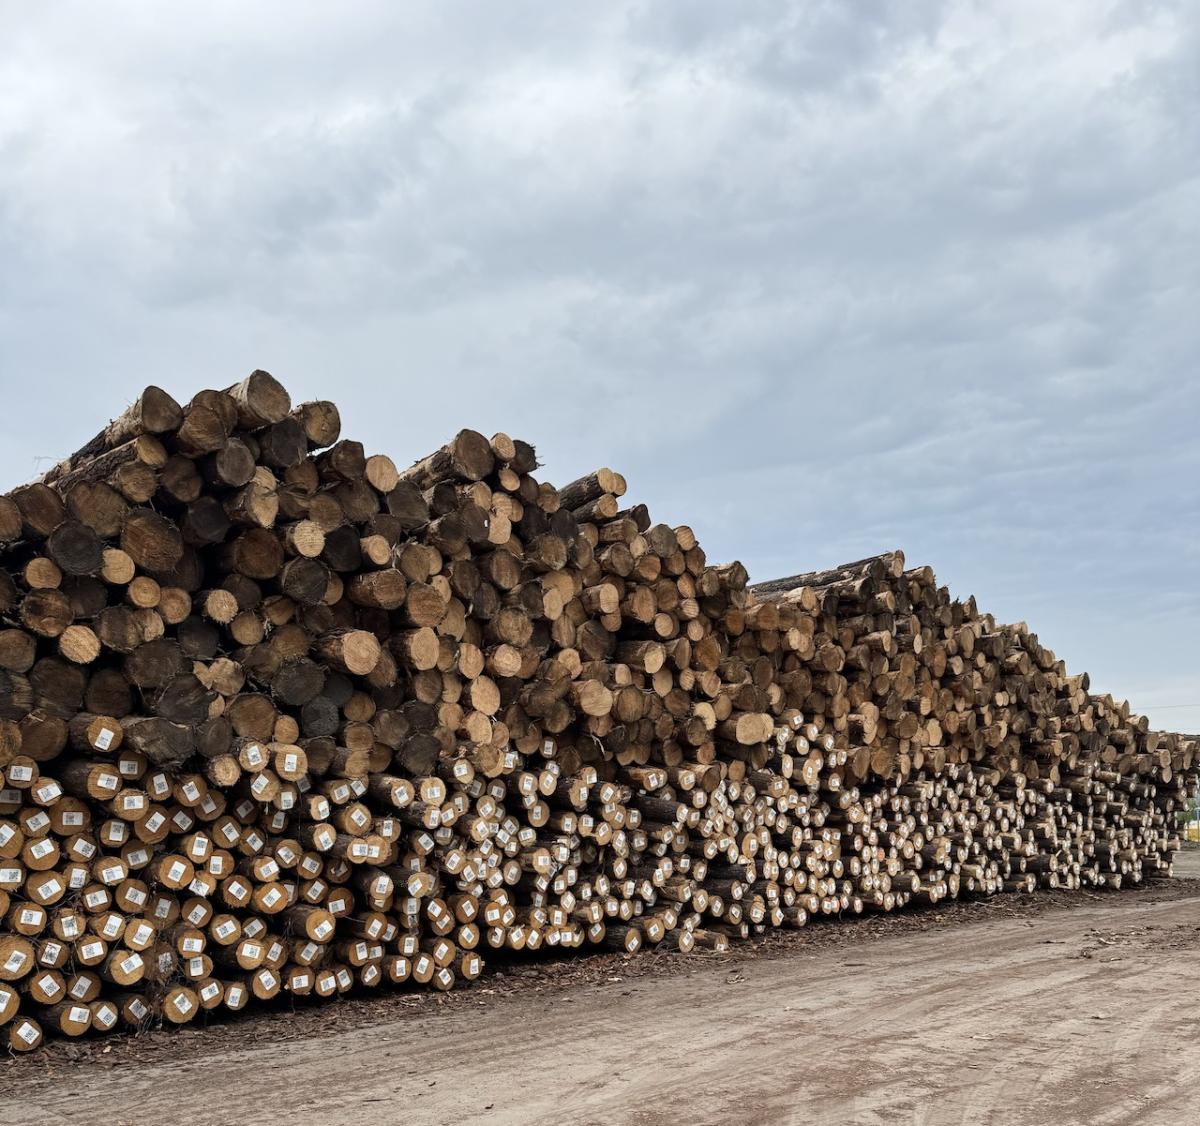 photo of log piles